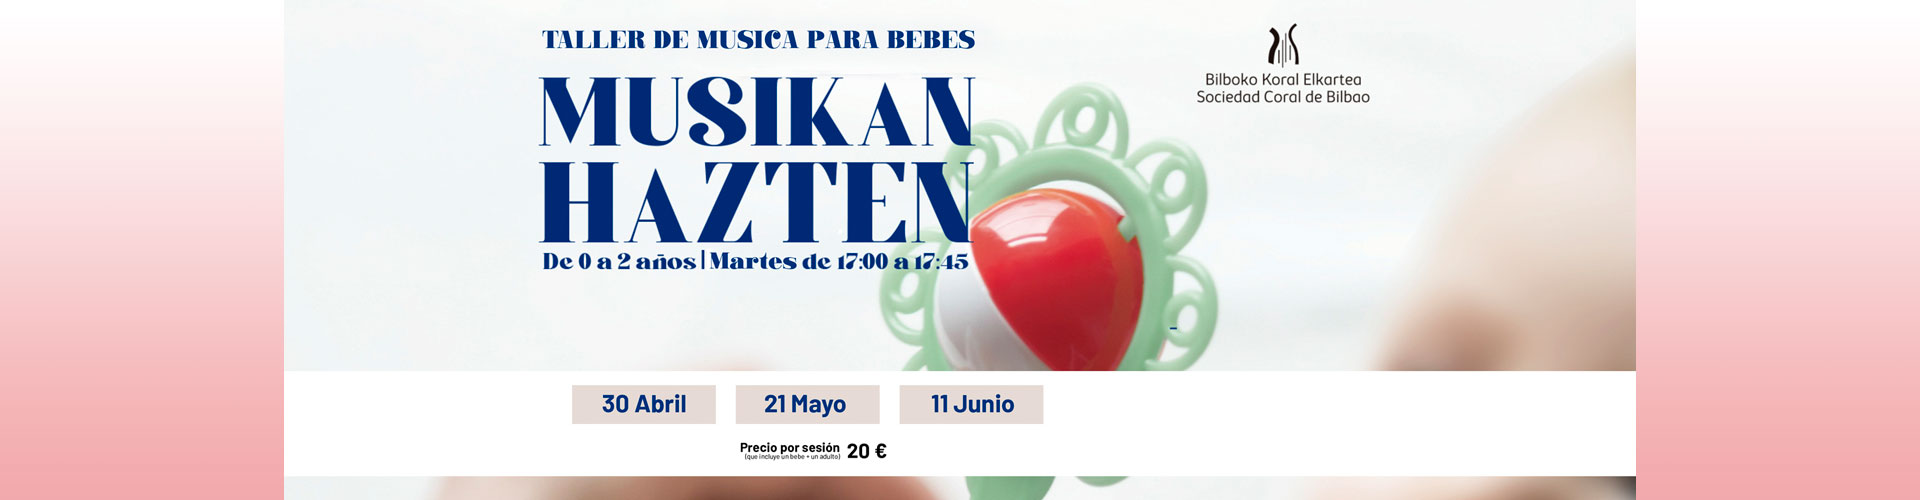 Taller de música para bebés en Bilbao